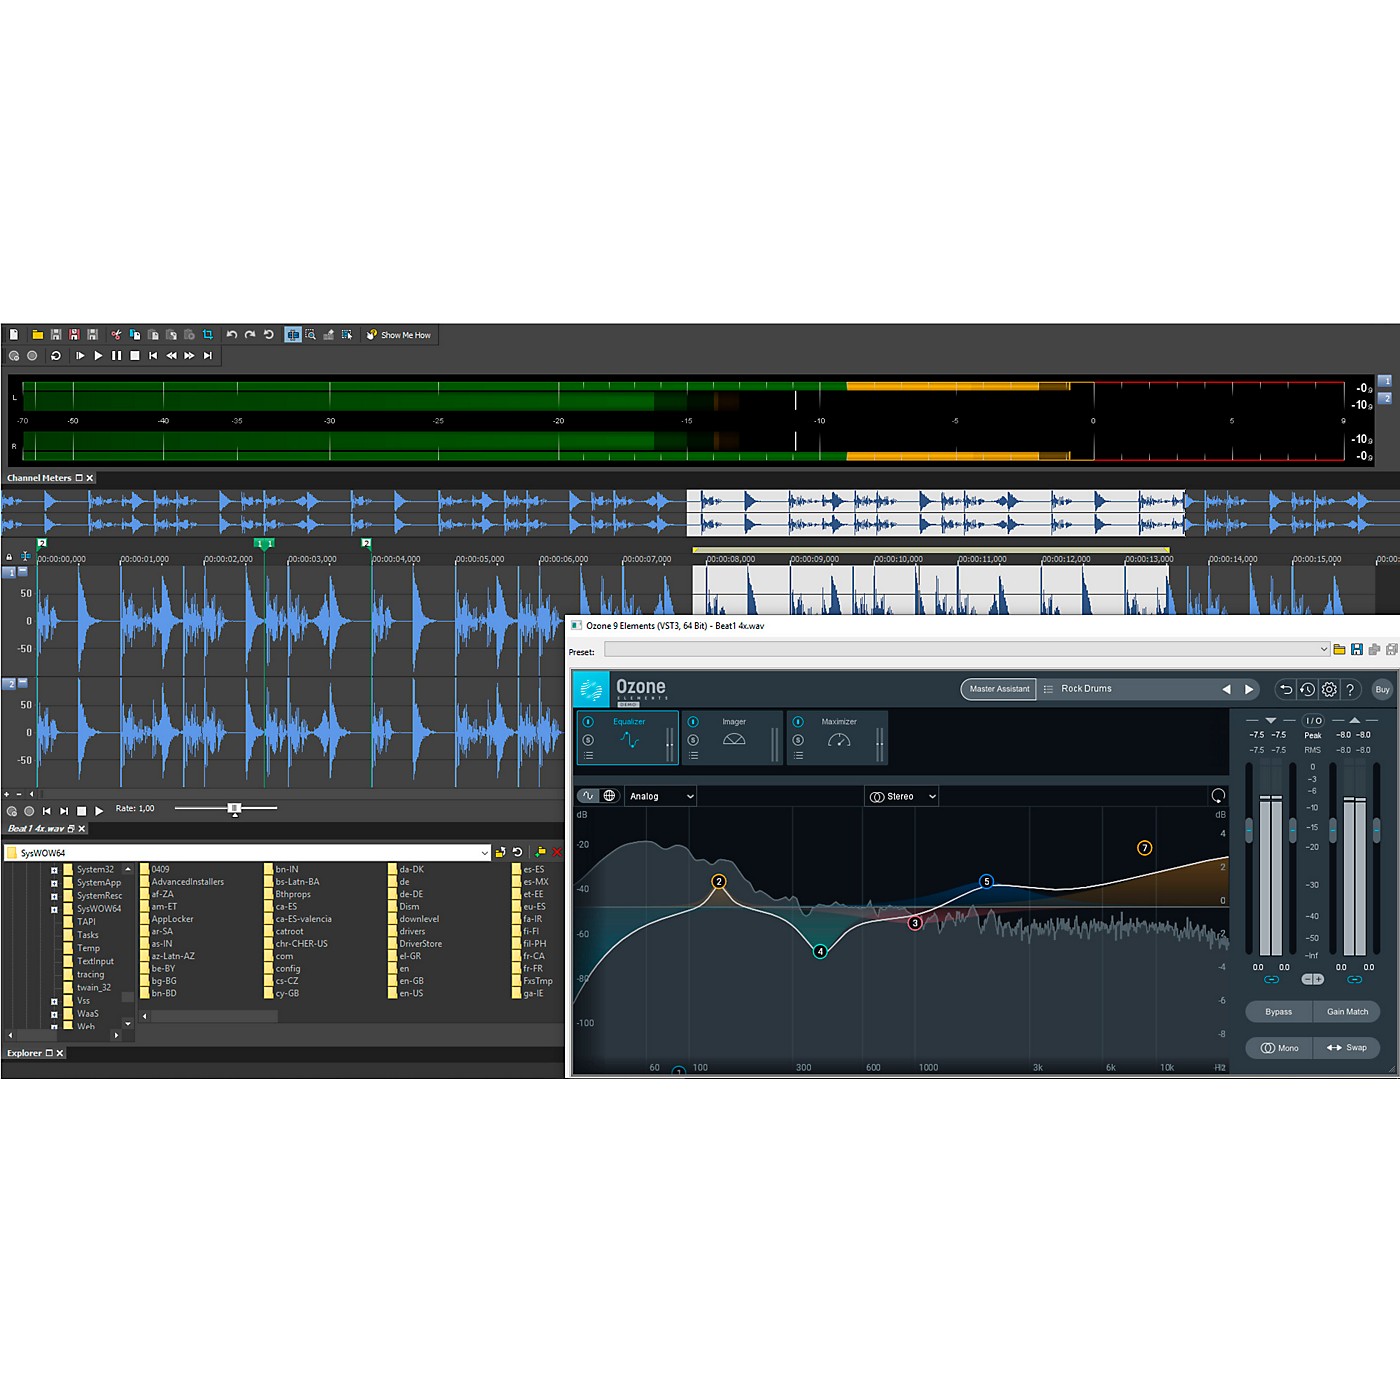 download the last version for ipod MAGIX Sound Forge Audio Studio Pro 17.0.2.109